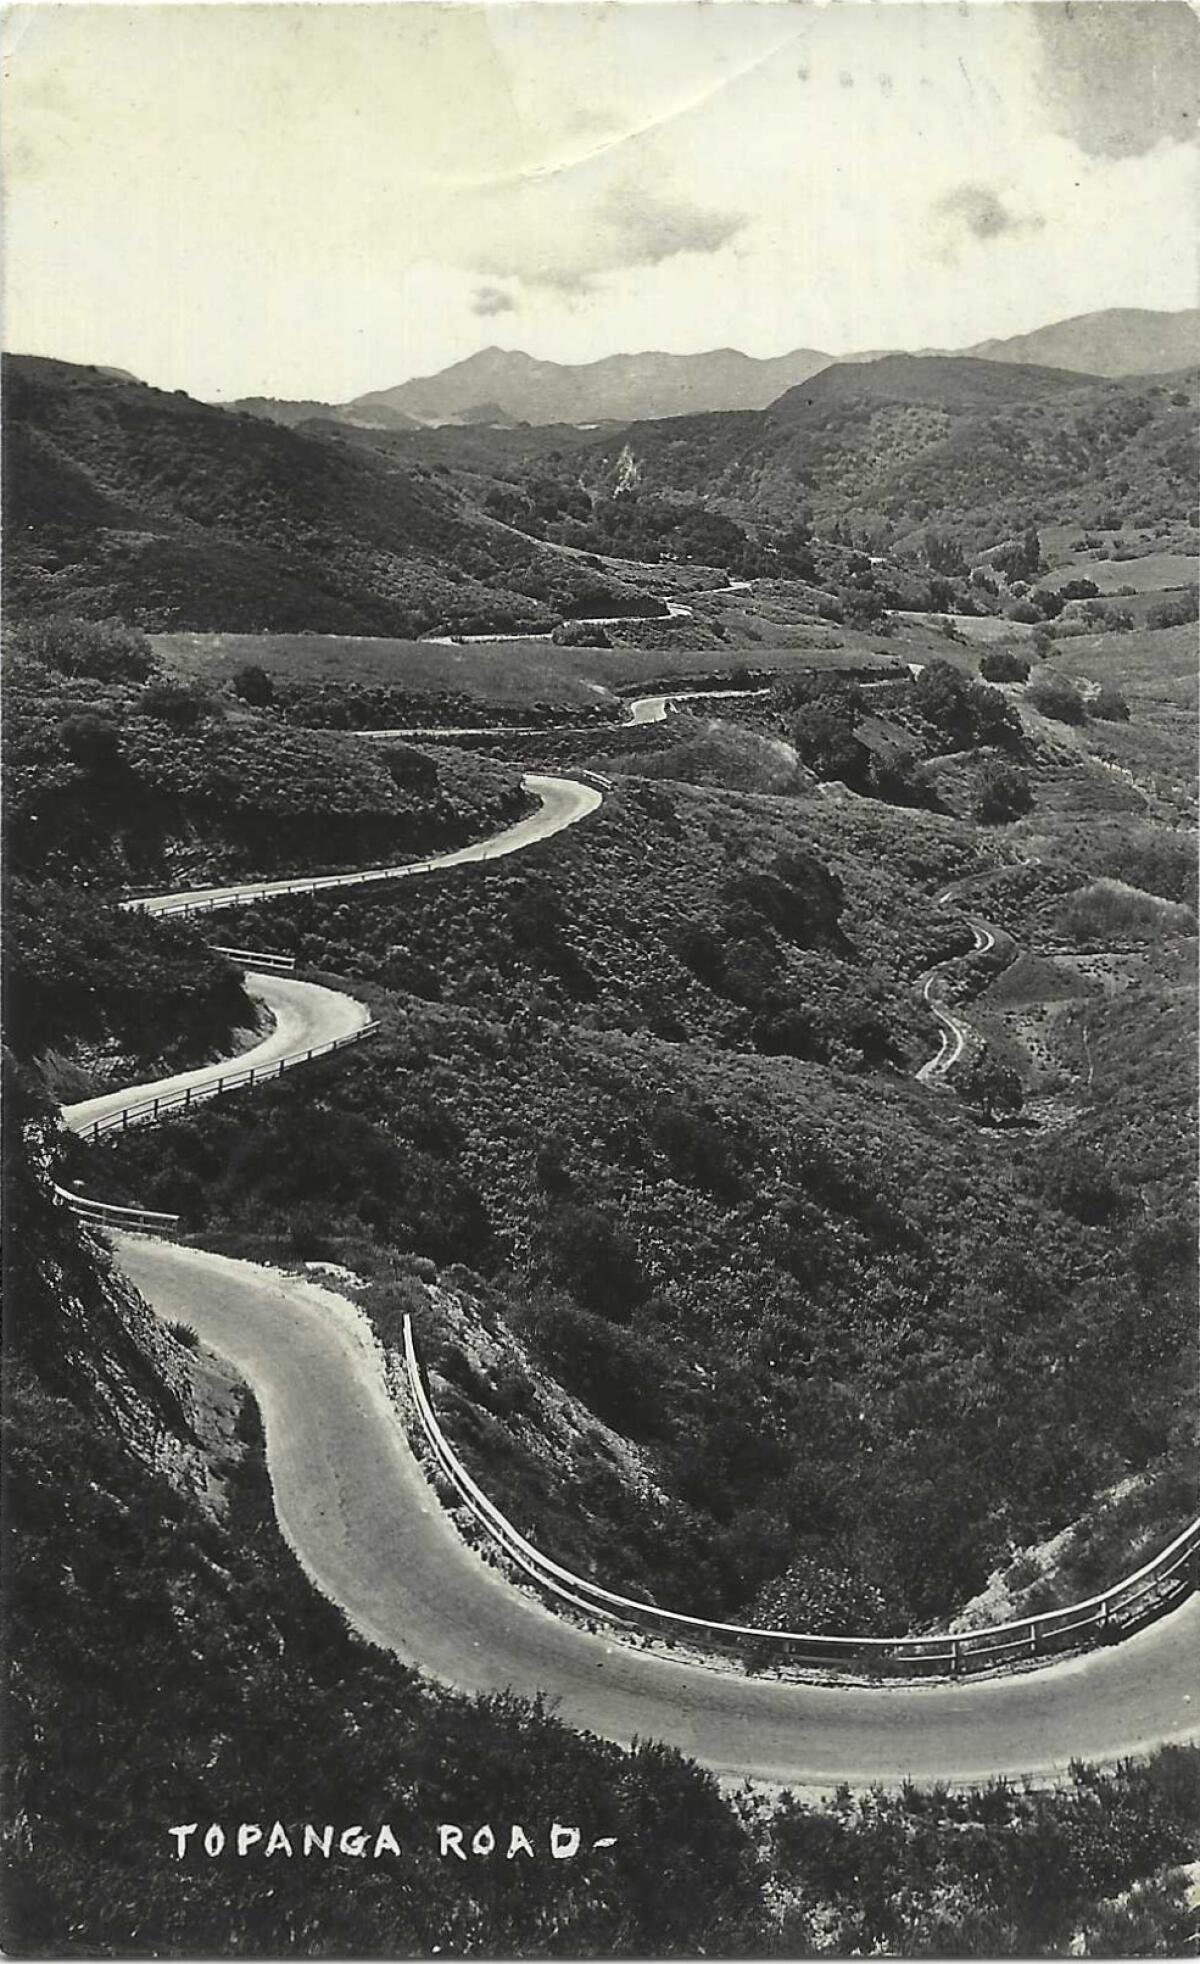 A road winds through the Topanga Canyon hills